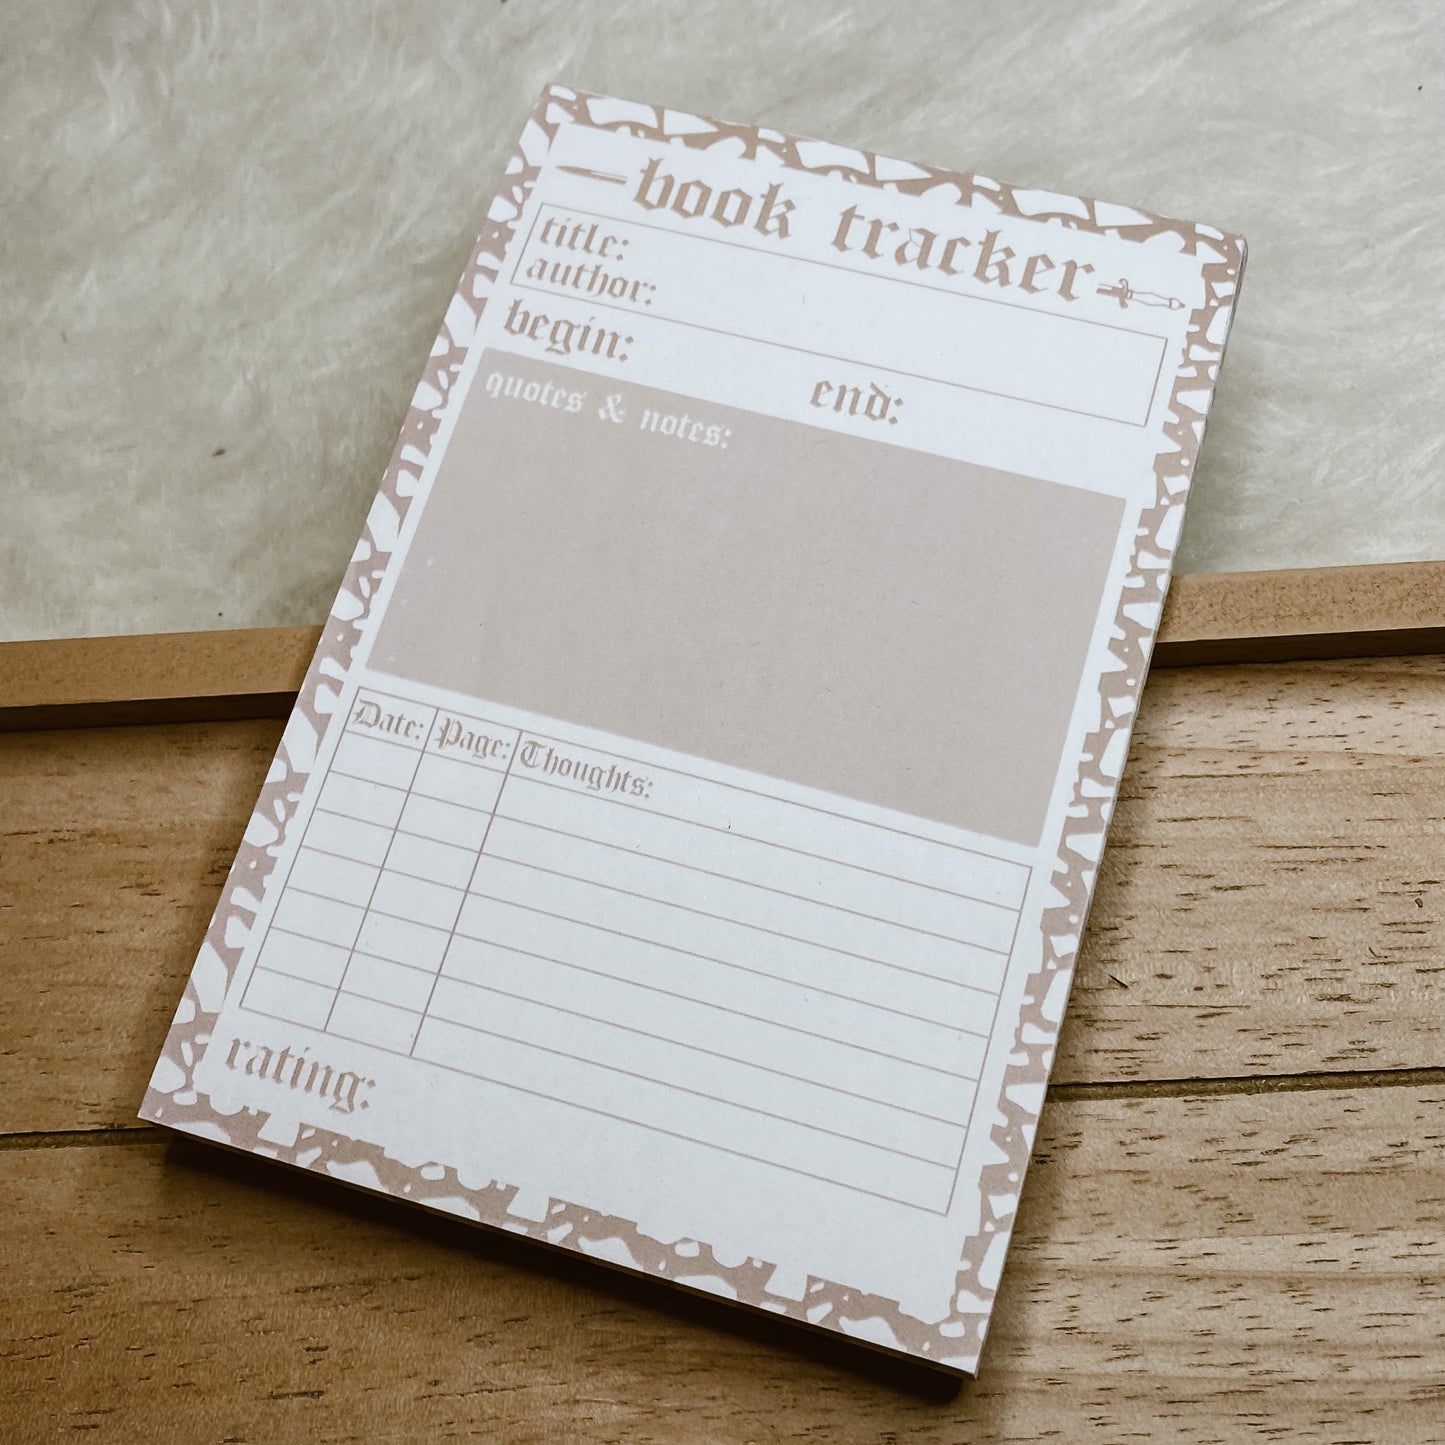 Book Tracker Notepad